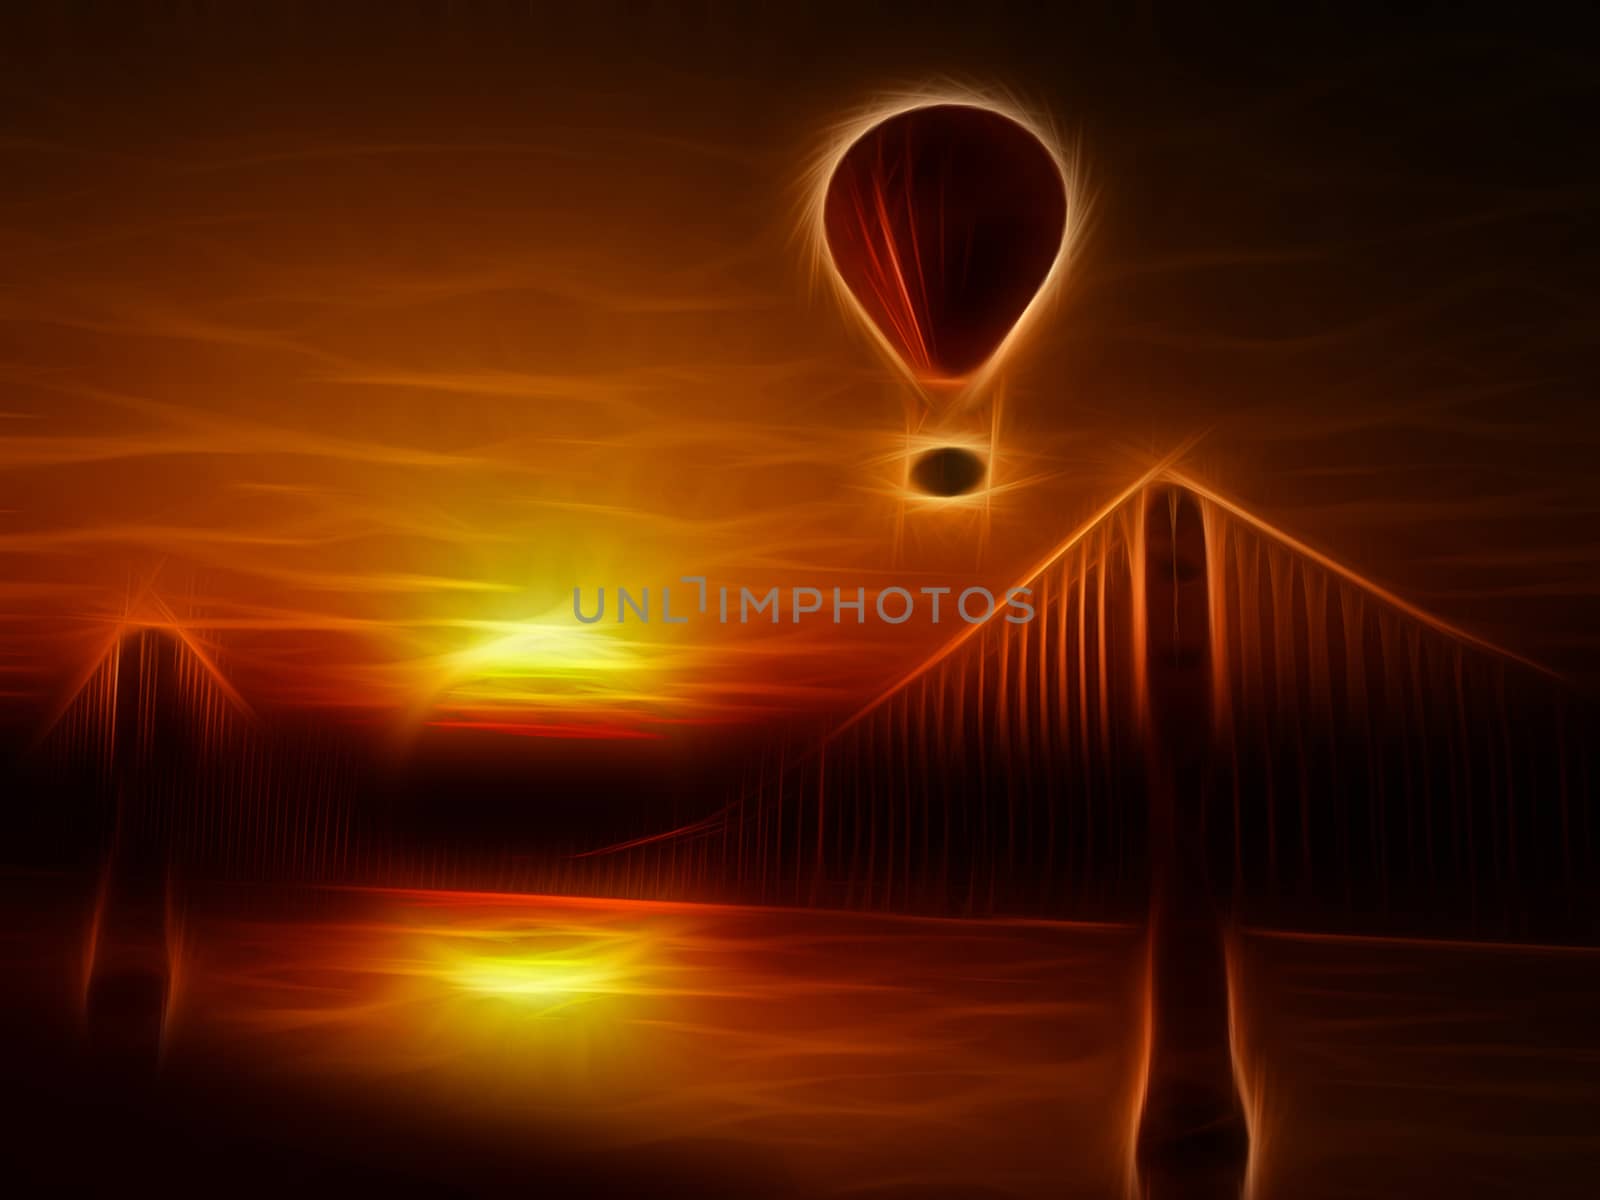 Hot Air Balloon and Golden Gate Bridge Illustration